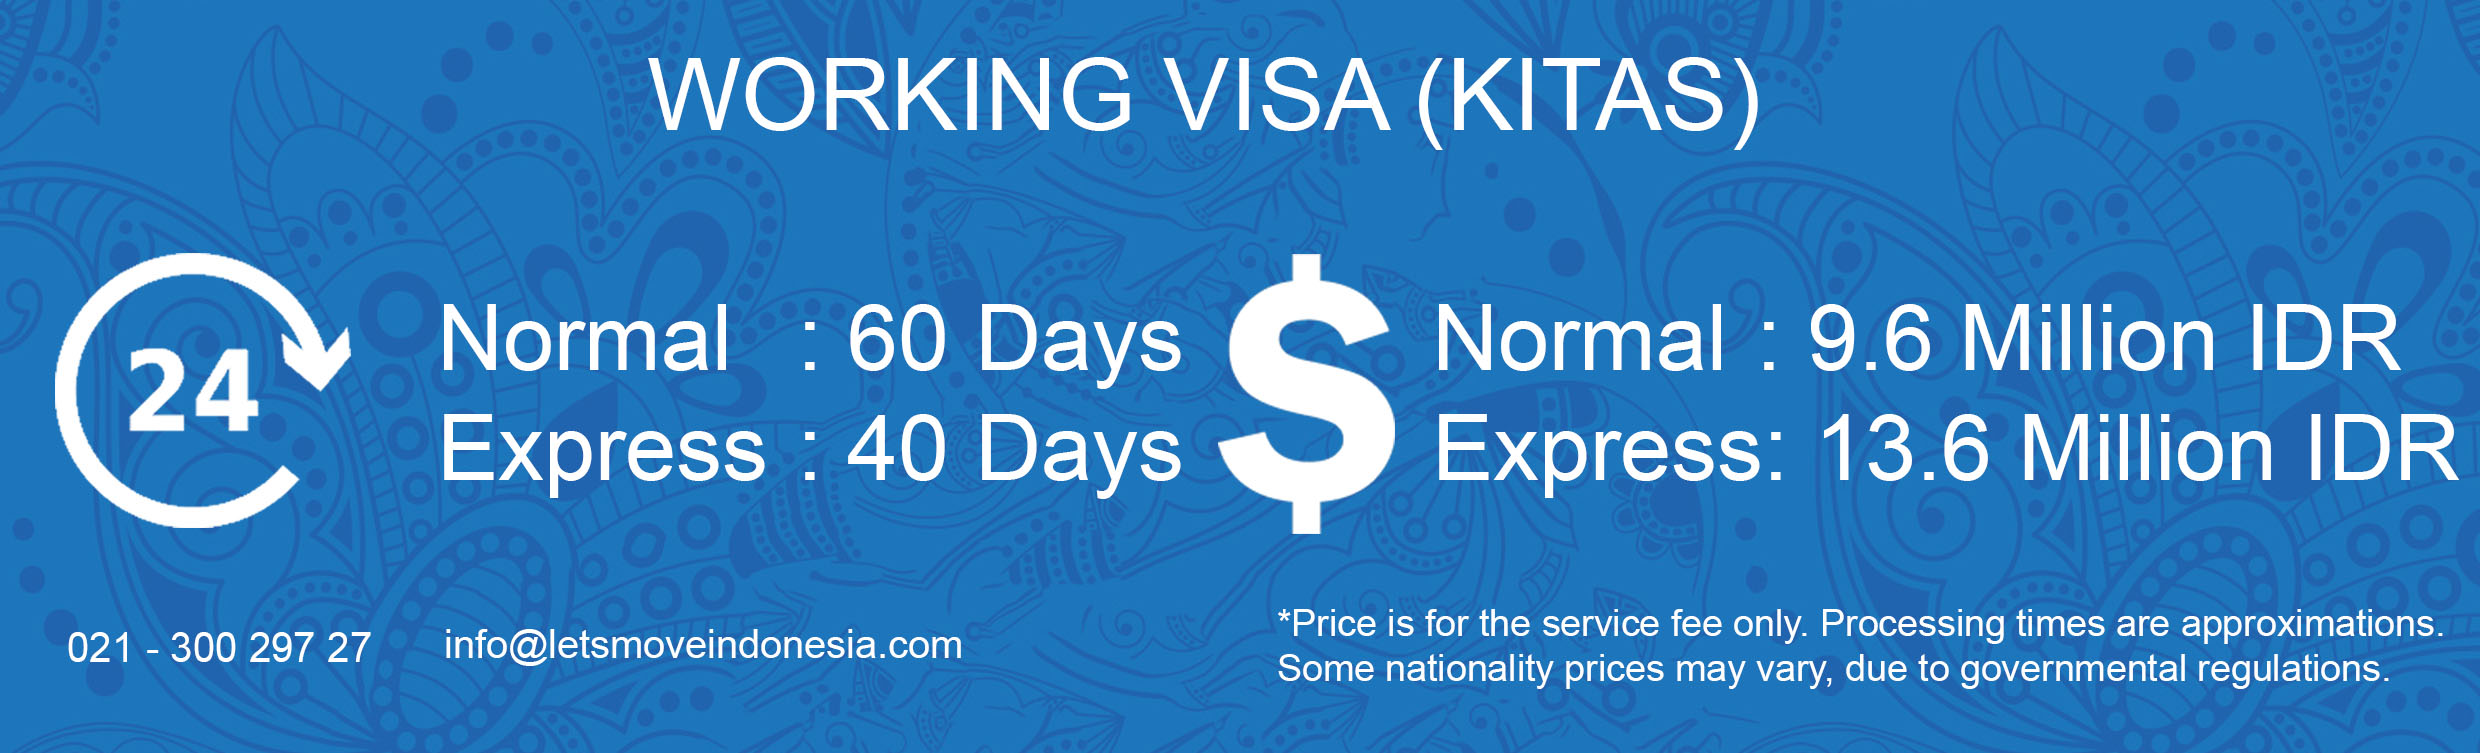 Working Visa (KITAS) | LetsMoveIndonesia